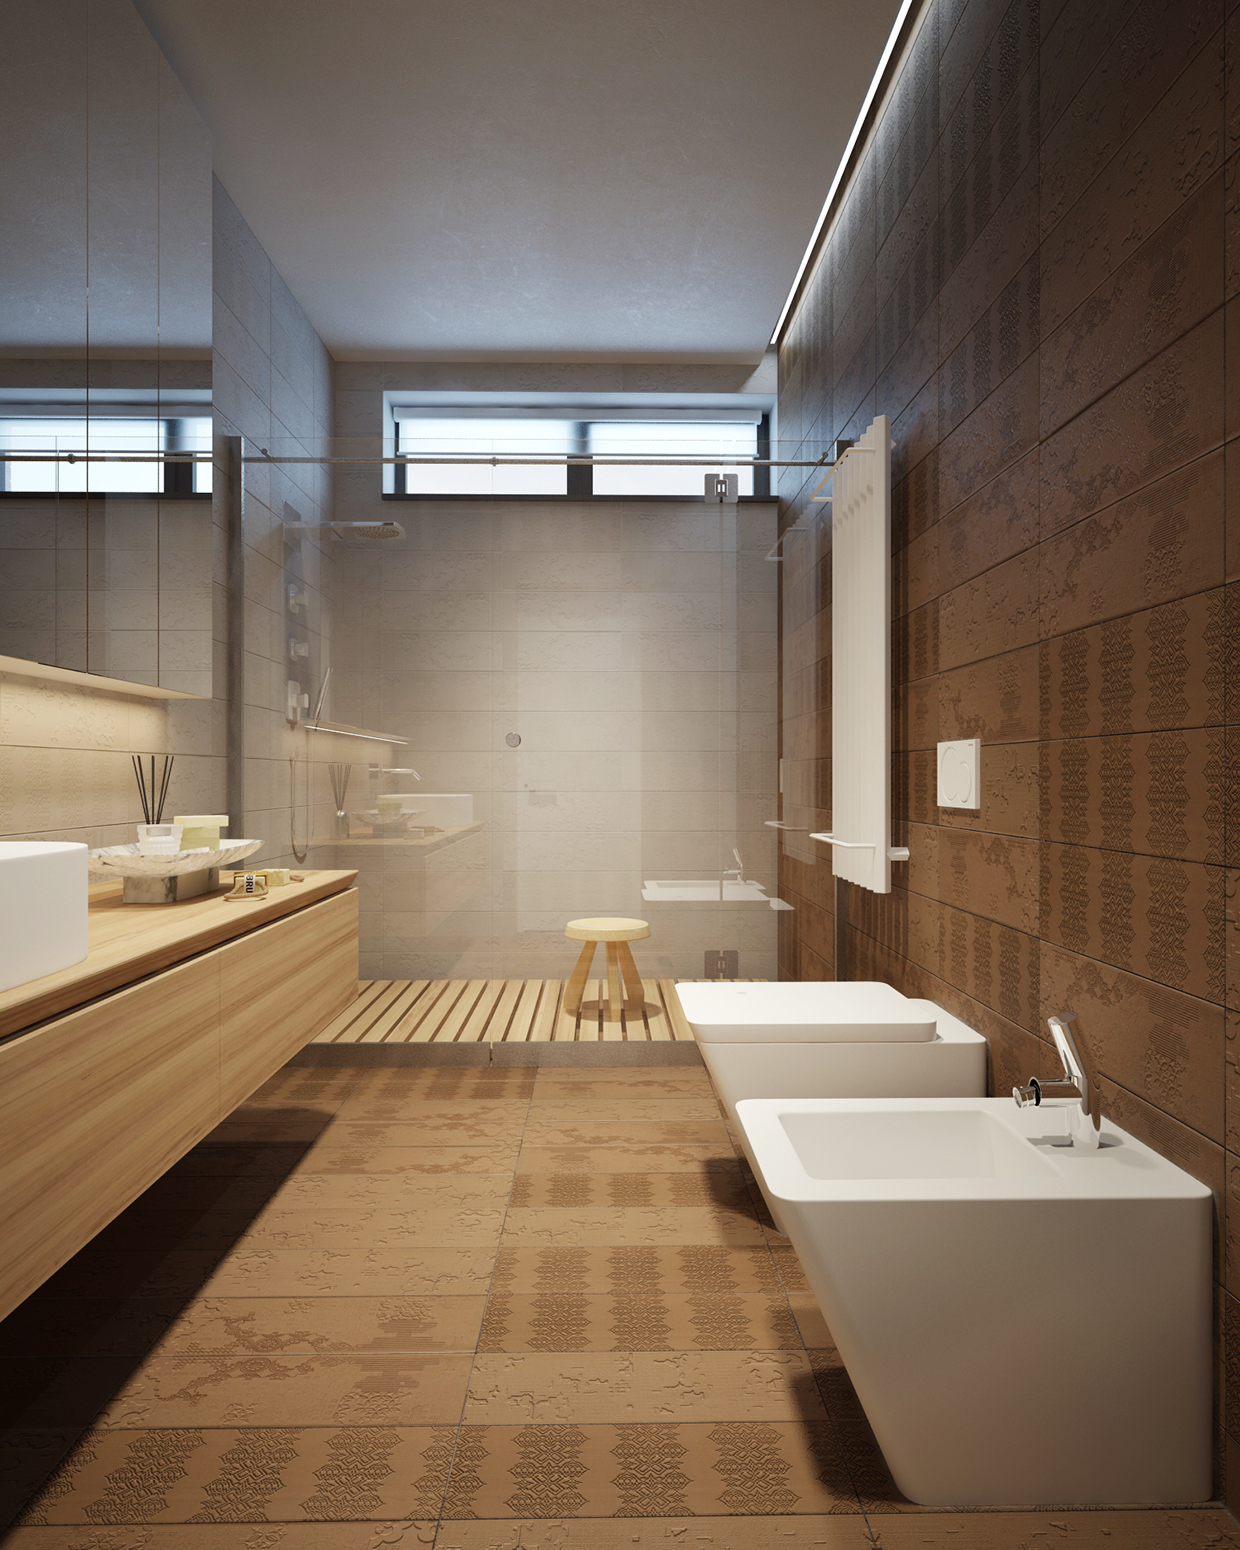 Luxury bathroom design "width =" 1240 "height =" 1550 "srcset =" https://mileray.com/wp-content/uploads/2020/05/1588515143_755_Decorating-Bathroom-Backsplash-Ideas-Showing-a-Modern-and-Luxury-Design.jpg 1240w, https://mileray.com/ wp-content / uploads / 2016/09 / Oleksii-Karman2-240x300.jpg 240w, https://mileray.com/wp-content/uploads/2016/09/Oleksii-Karman2-768x960.jpg 768w, https: // mileray.com/wp-content/uploads/2016/09/Oleksii-Karman2-819x1024.jpg 819w, https://mileray.com/wp-content/uploads/2016/09/Oleksii-Karman2-696x870.jpg 696w, https://mileray.com/wp-content/uploads/2016/09/Oleksii-Karman2-1068x1335.jpg 1068w, https://mileray.com/wp-content/uploads/2016/09/Oleksii-Karman2-336x420 .jpg 336w "sizes =" (maximum width: 1240px) 100vw, 1240px